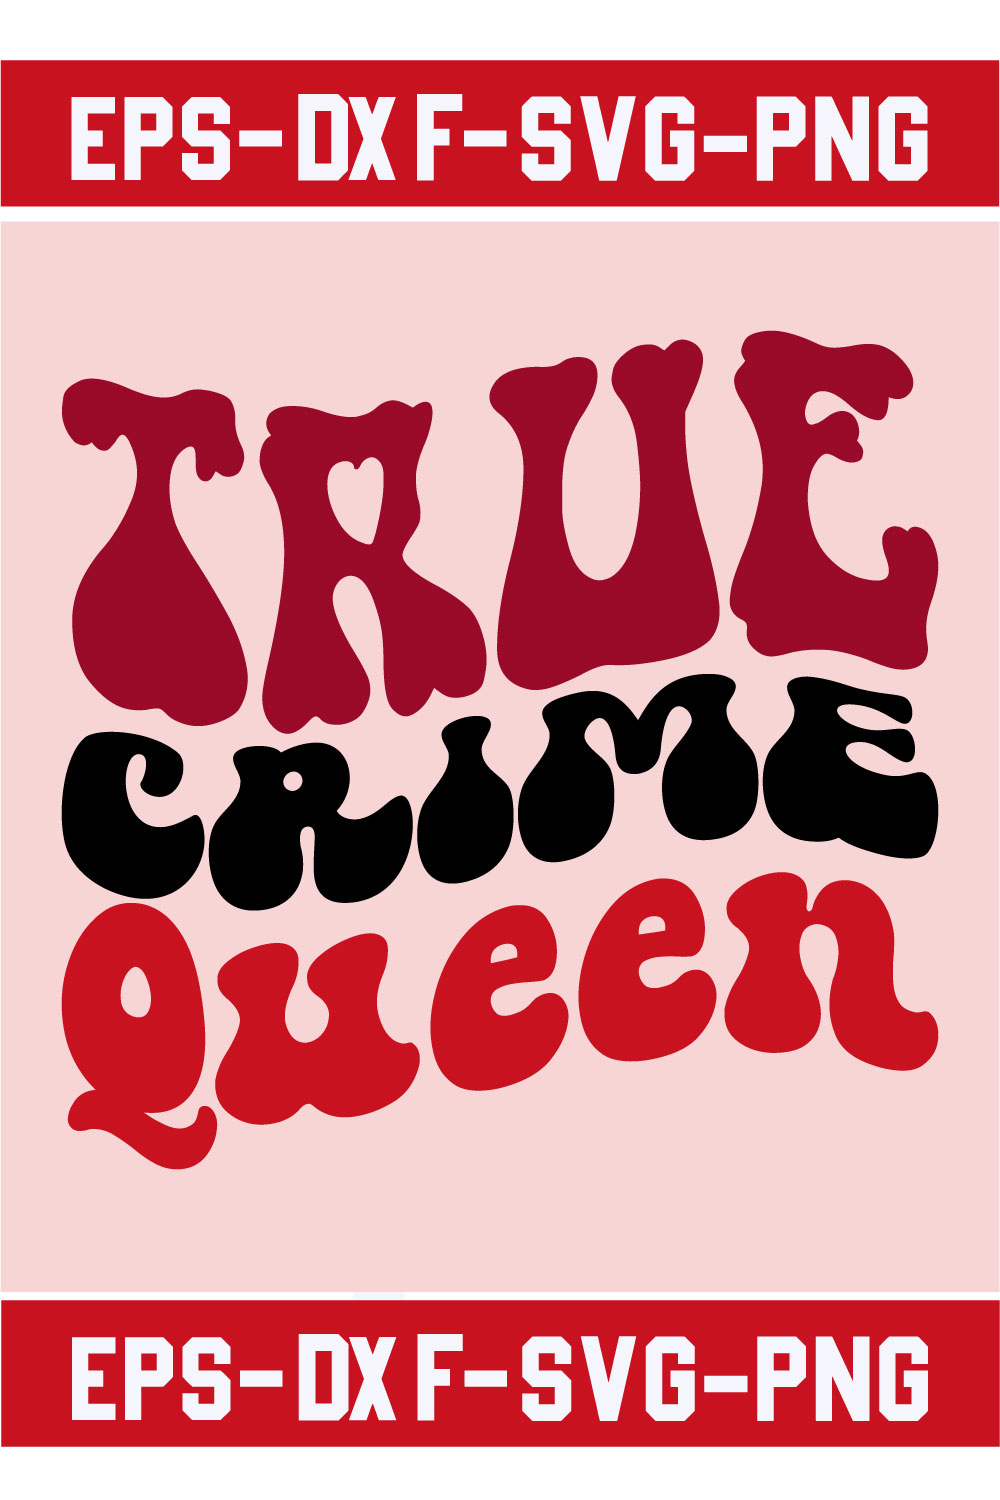 True Crime Queen pinterest preview image.